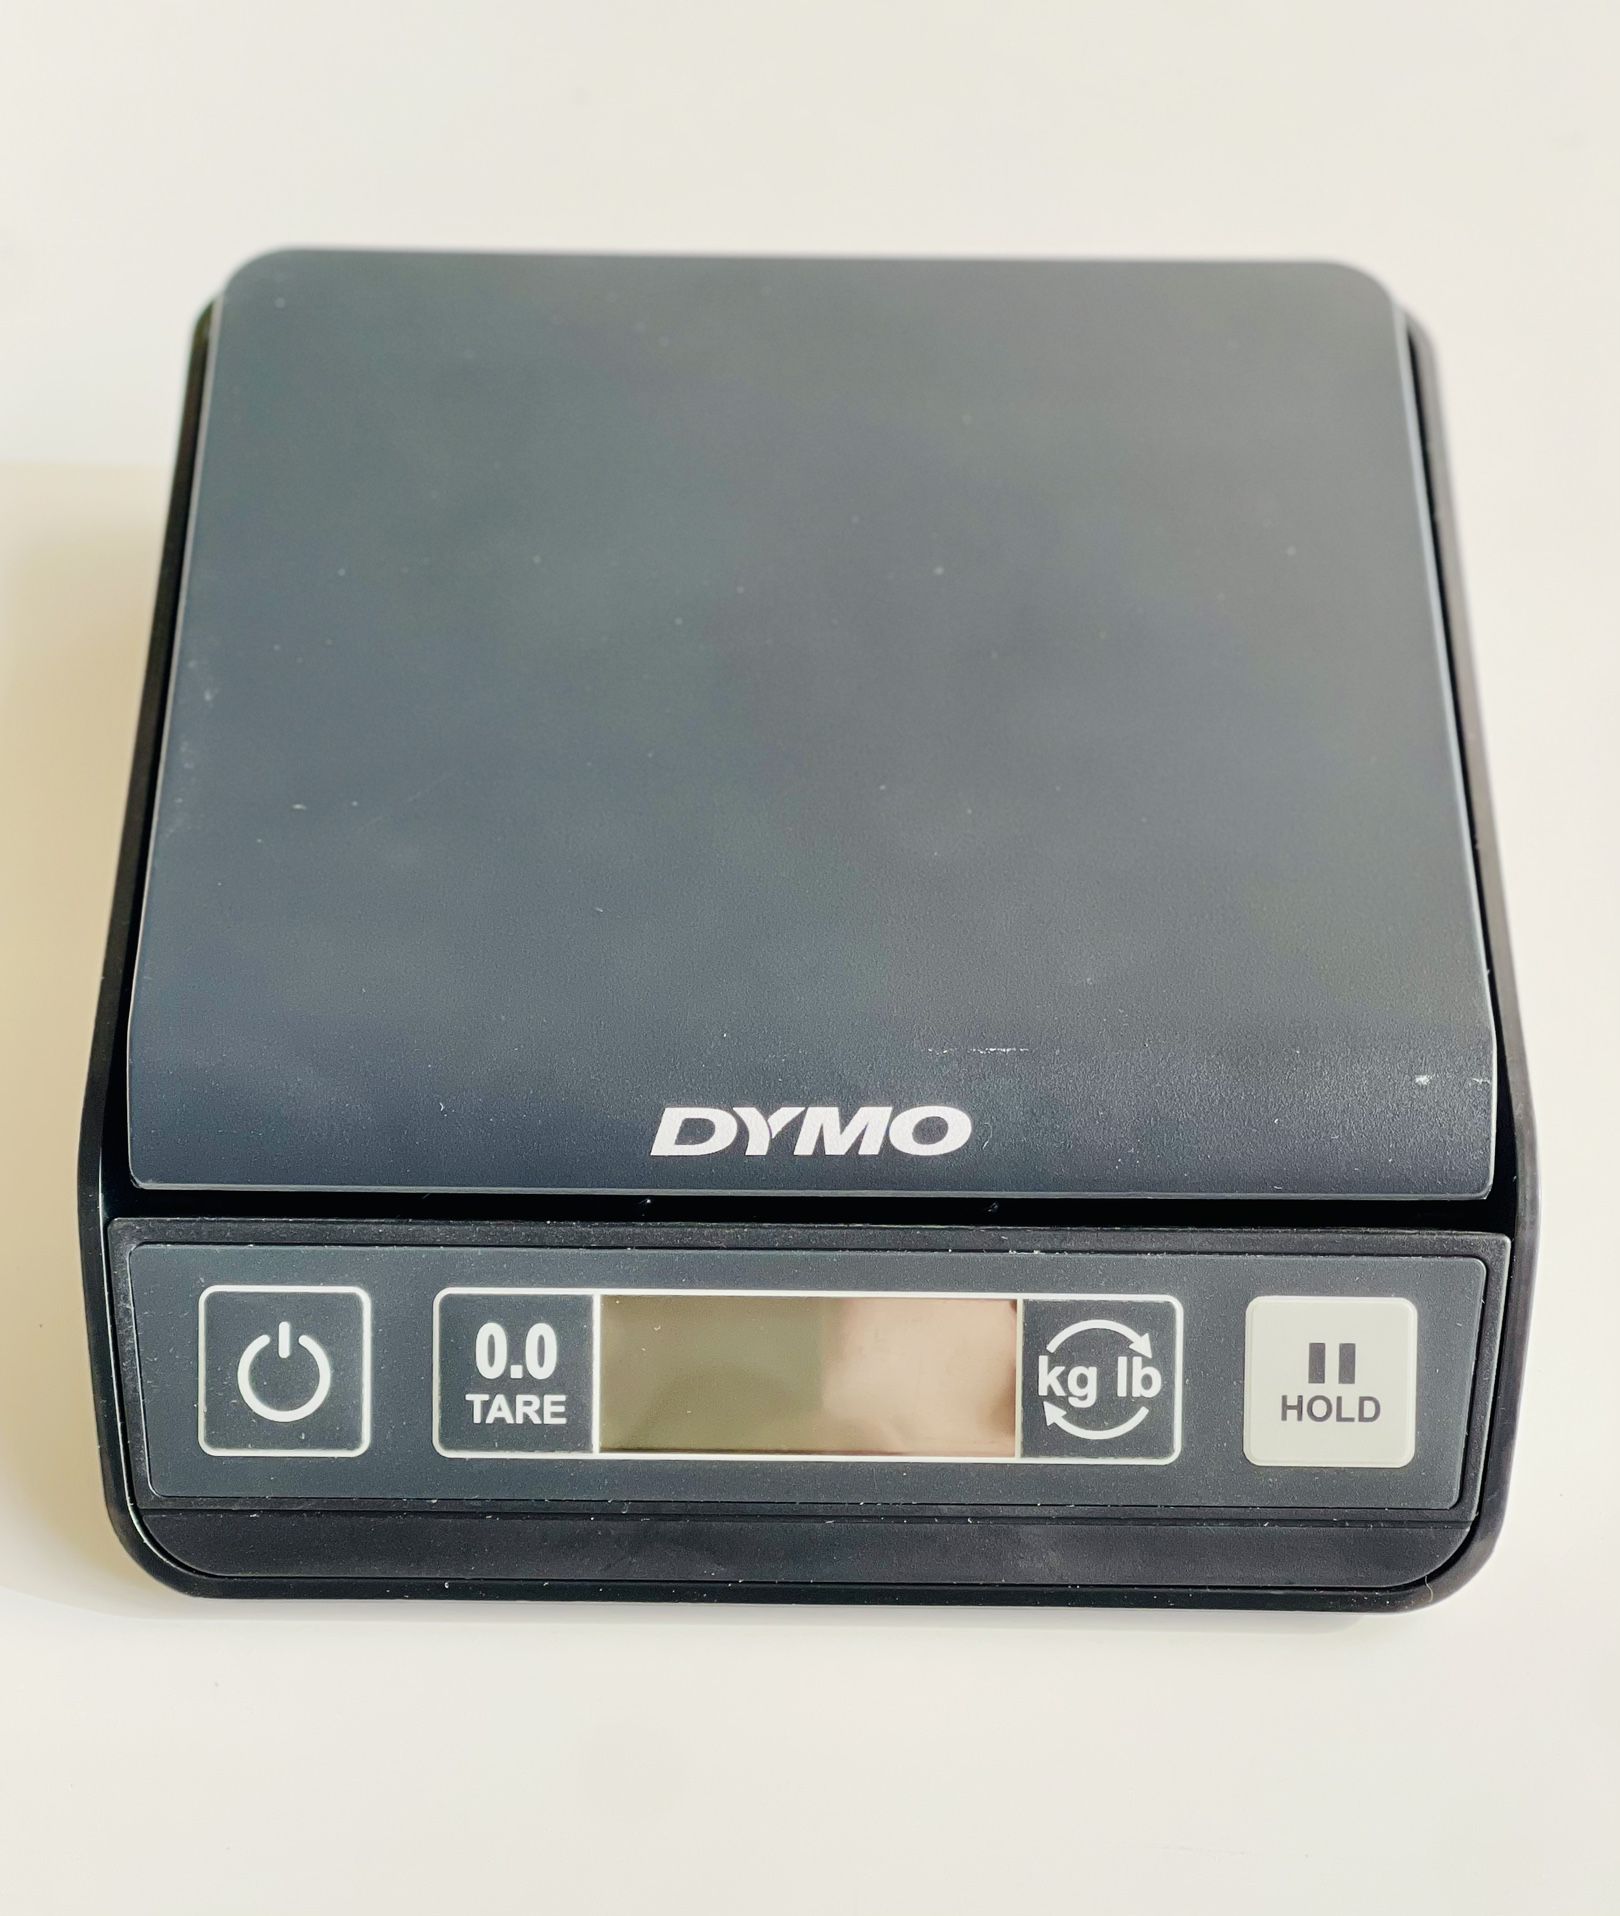 DYMO Digital Postal Or Kitchen Scale